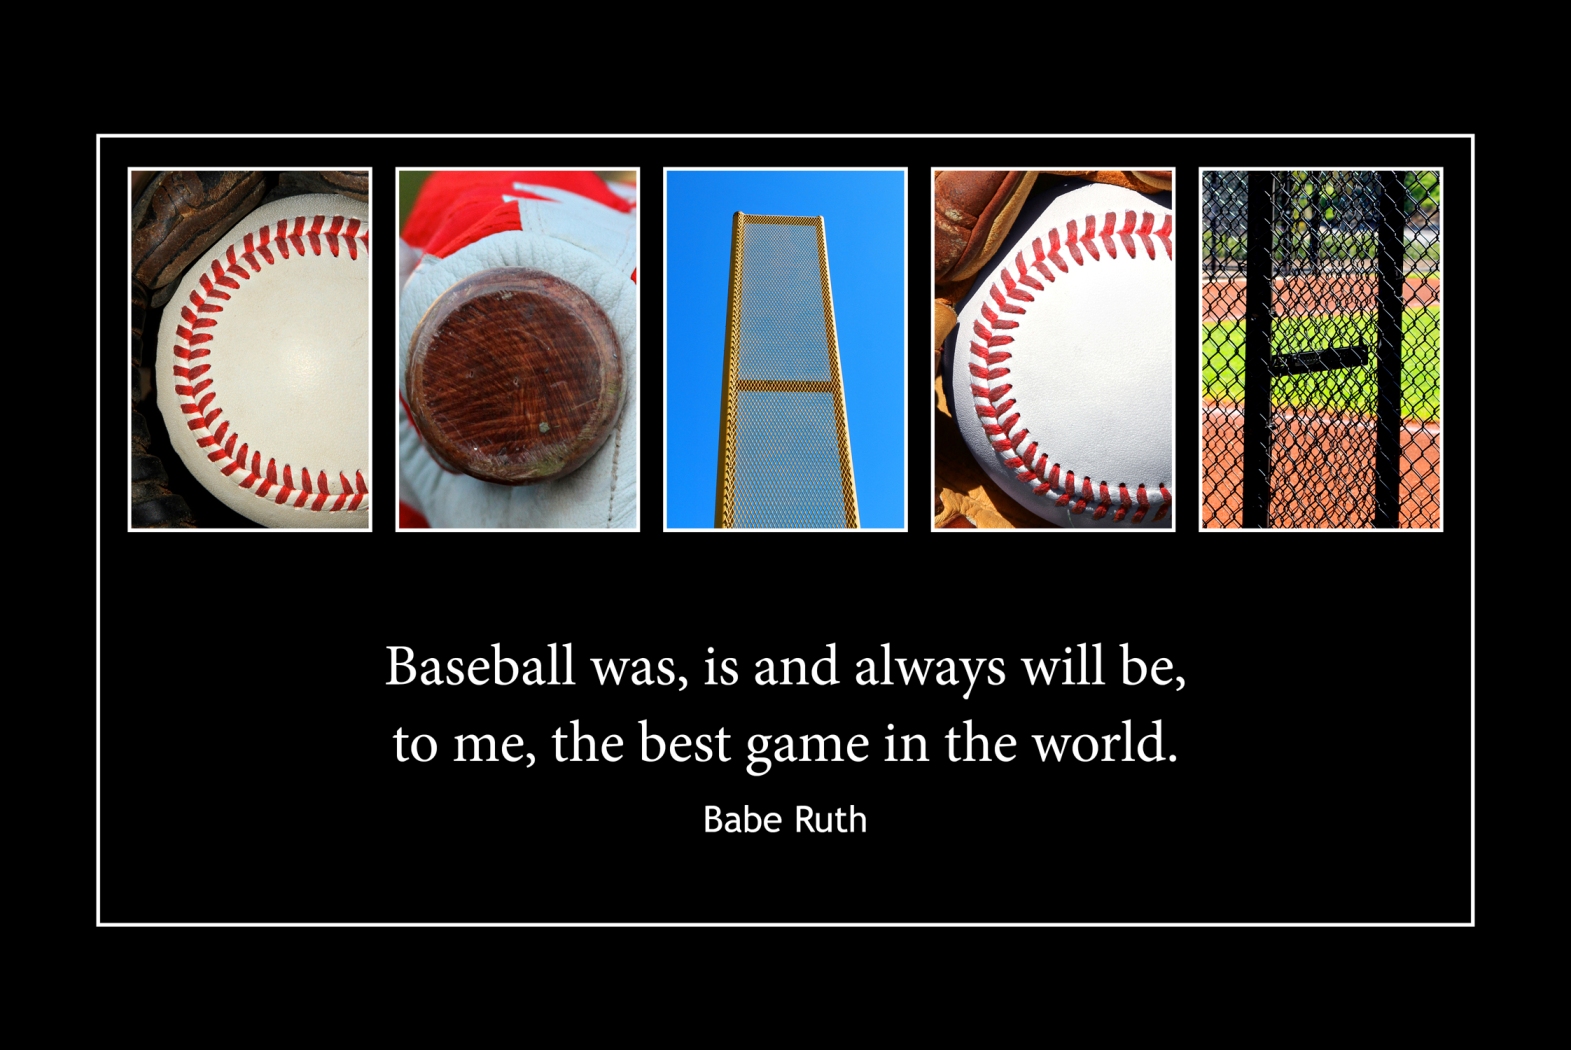 Baseball Coach Quotes Inspirational. QuotesGram